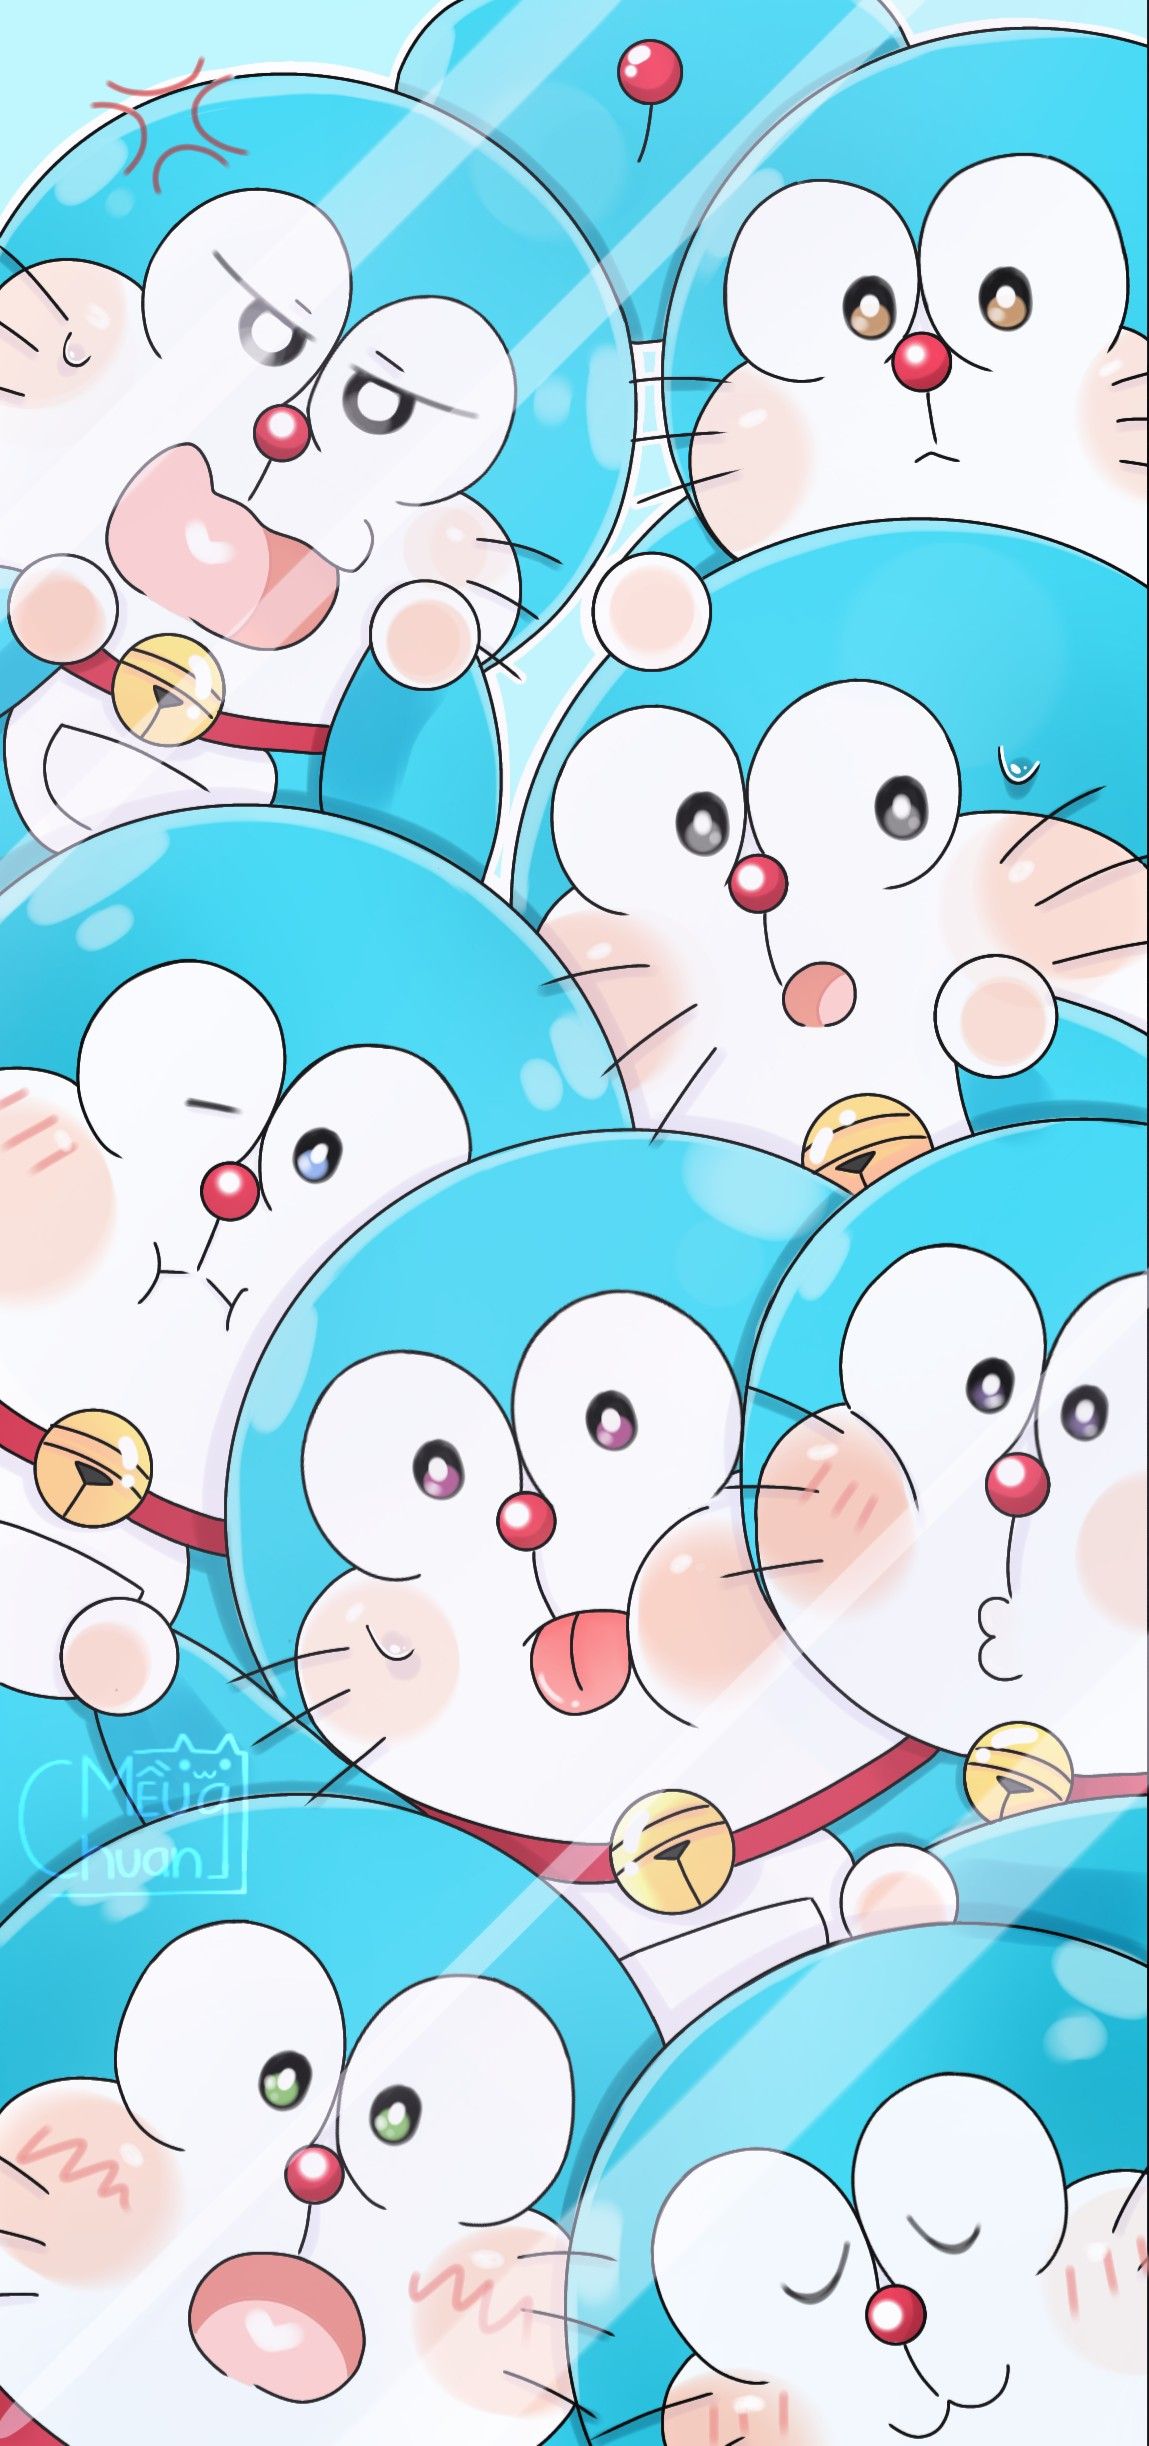 Ảnh nền Doraemon đẹp nhất nhất